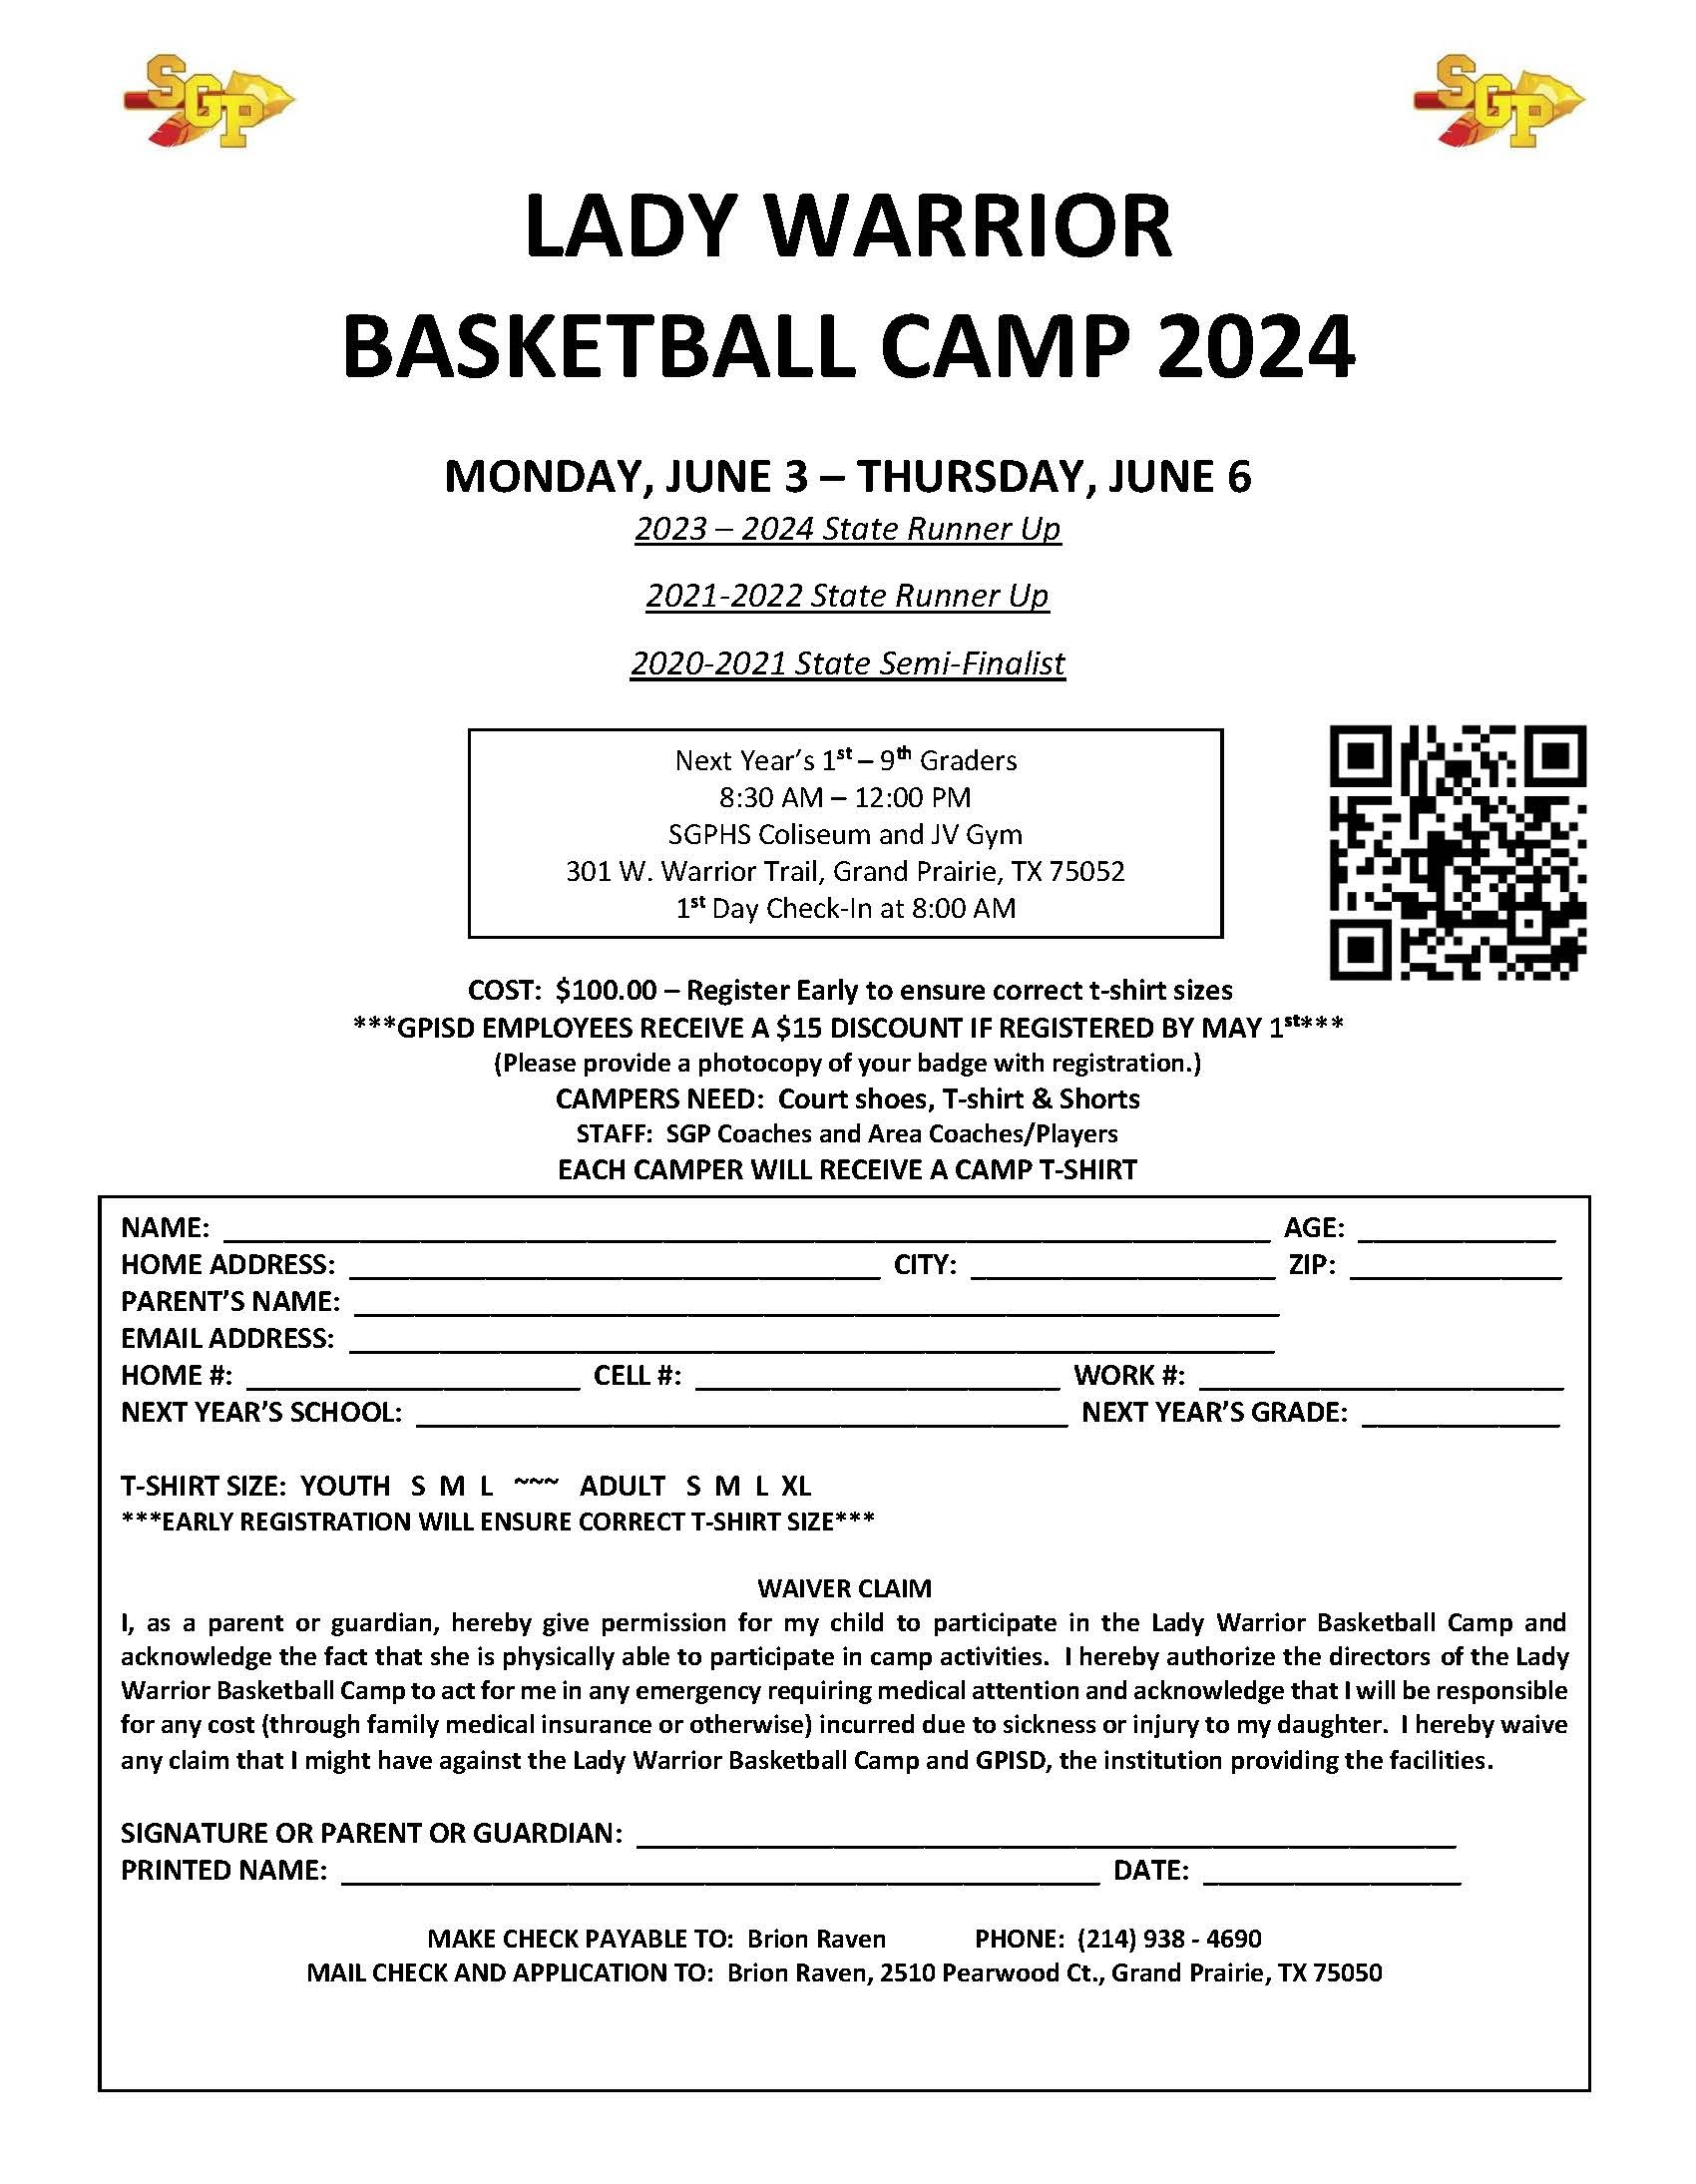 Lady Warrior Basketball Camp 2024 Updated.jpg